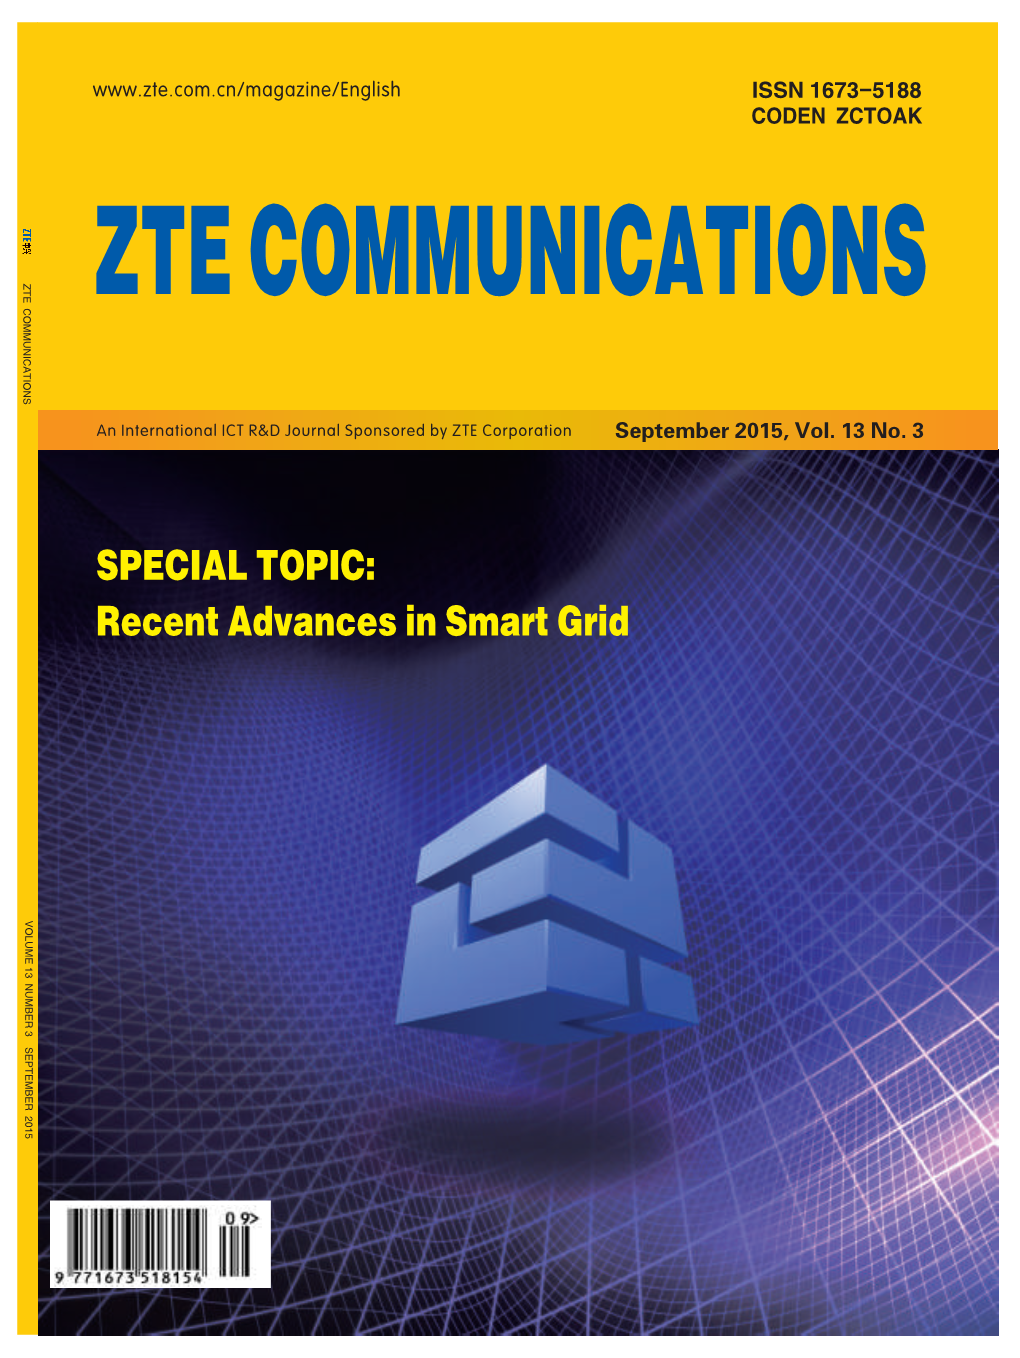 Recent Advances in Smart Grid VOLUME 13 NUMBER 3 SEPTEMBER 2015 ZTE Communications Editorial Board